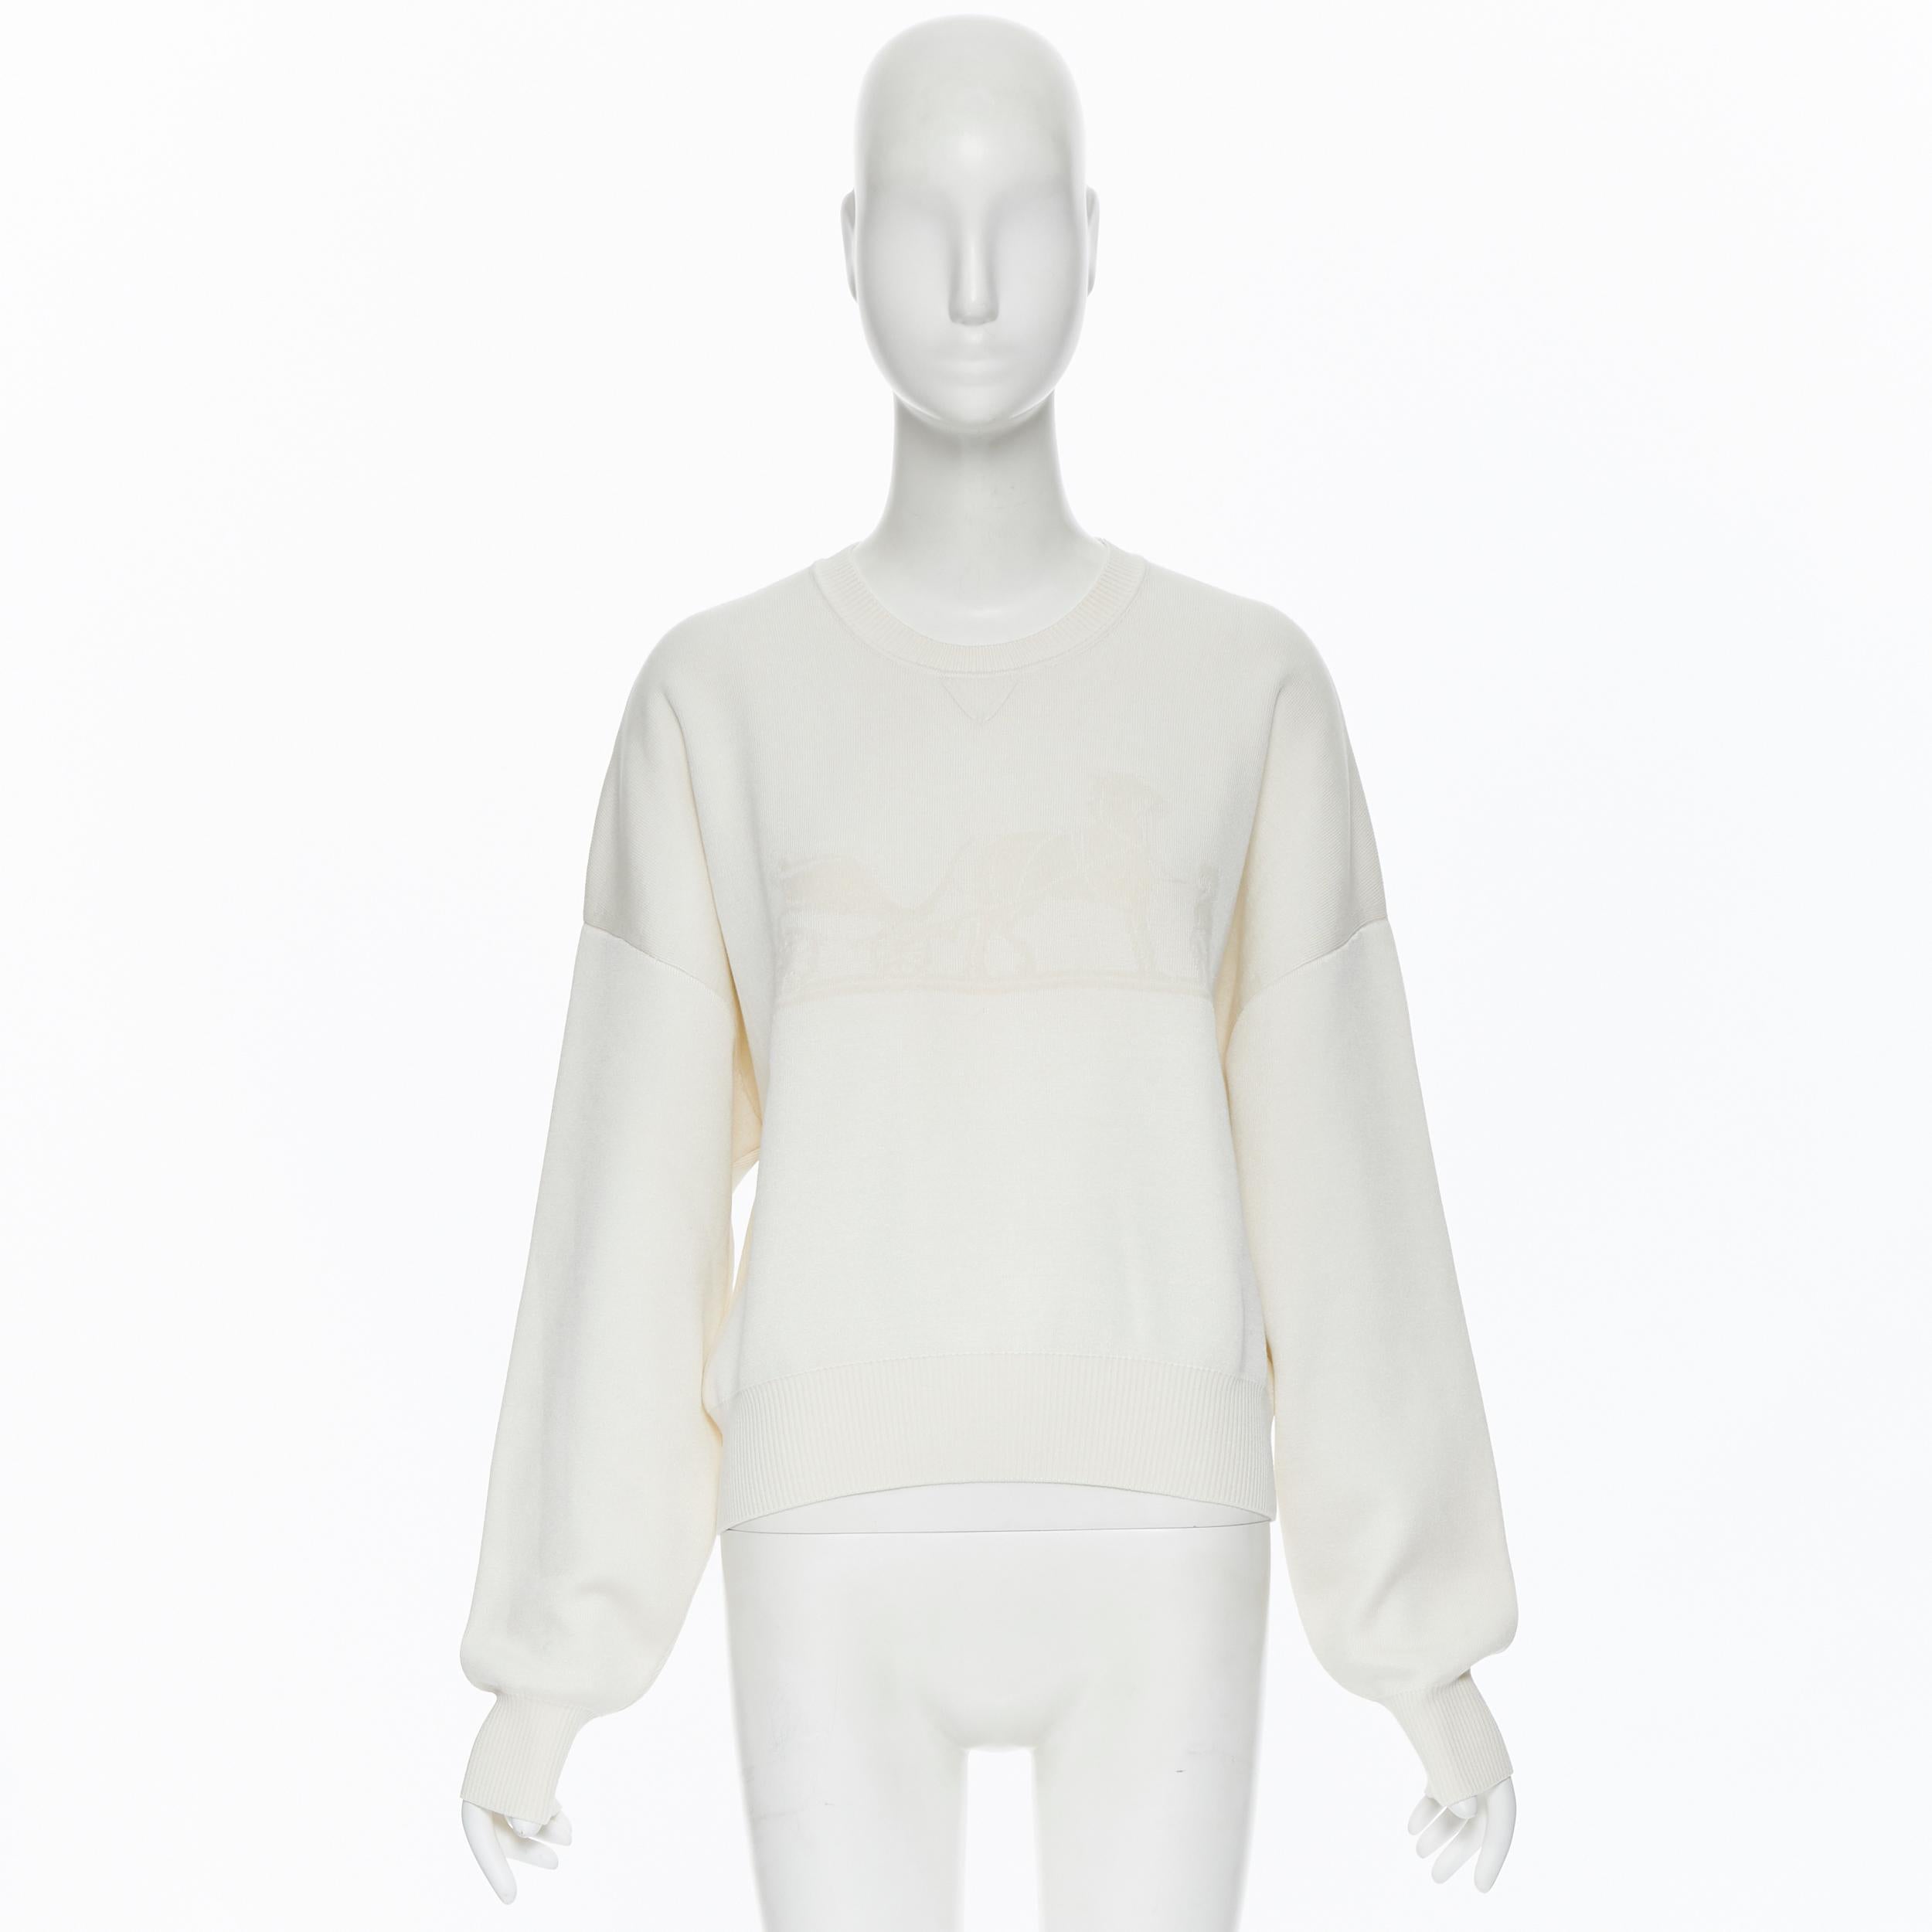 White Cream Brown Gray XL New England Vintage Winter Zip Up Cardigan Sweater Intarsia Turtleneck